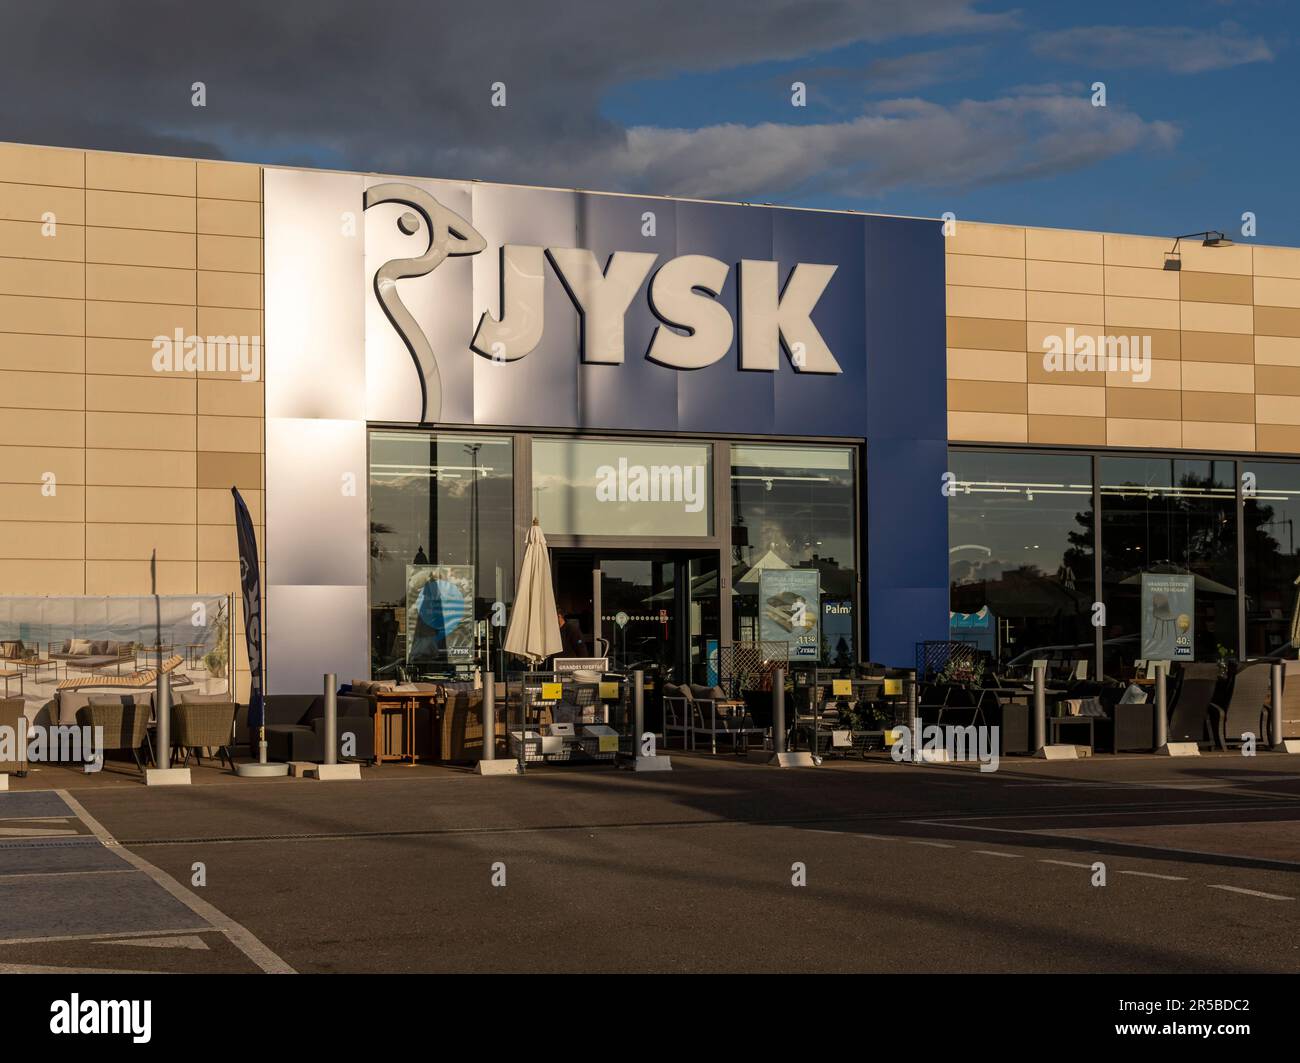 Jysk emblem hi-res stock photography and images - Alamy